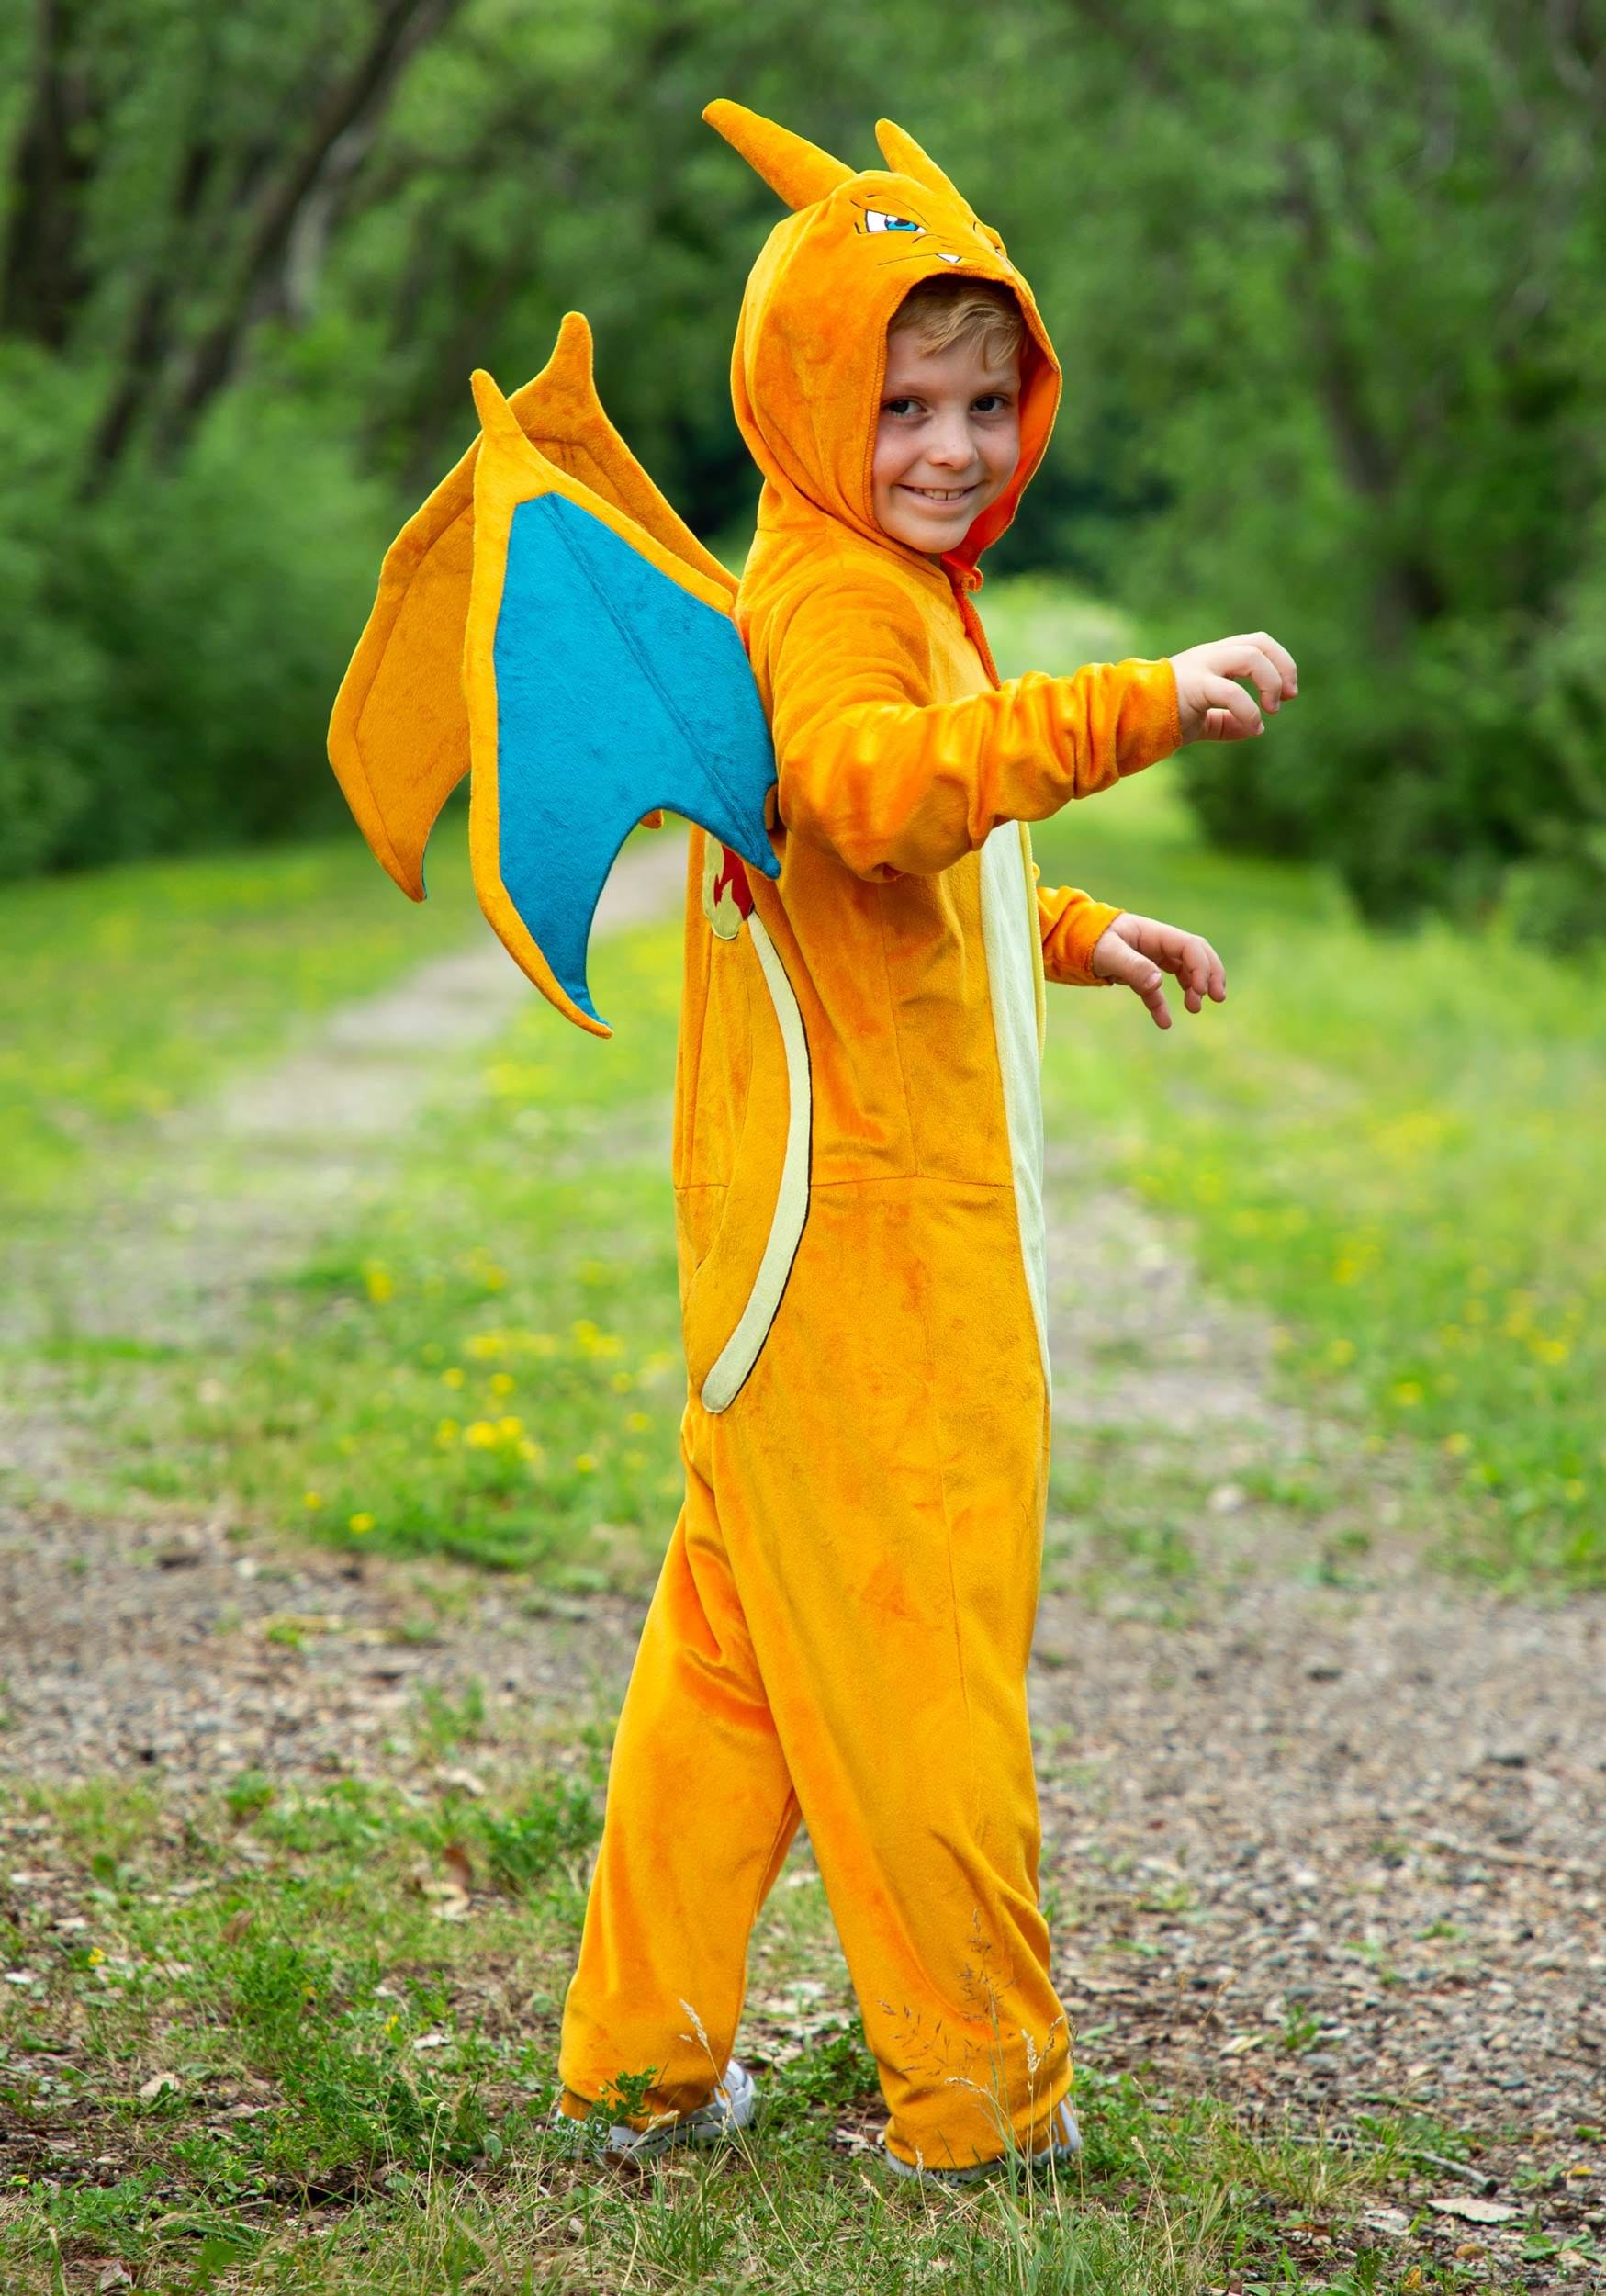 Naruto Deluxe Jacket Child Halloween Costume